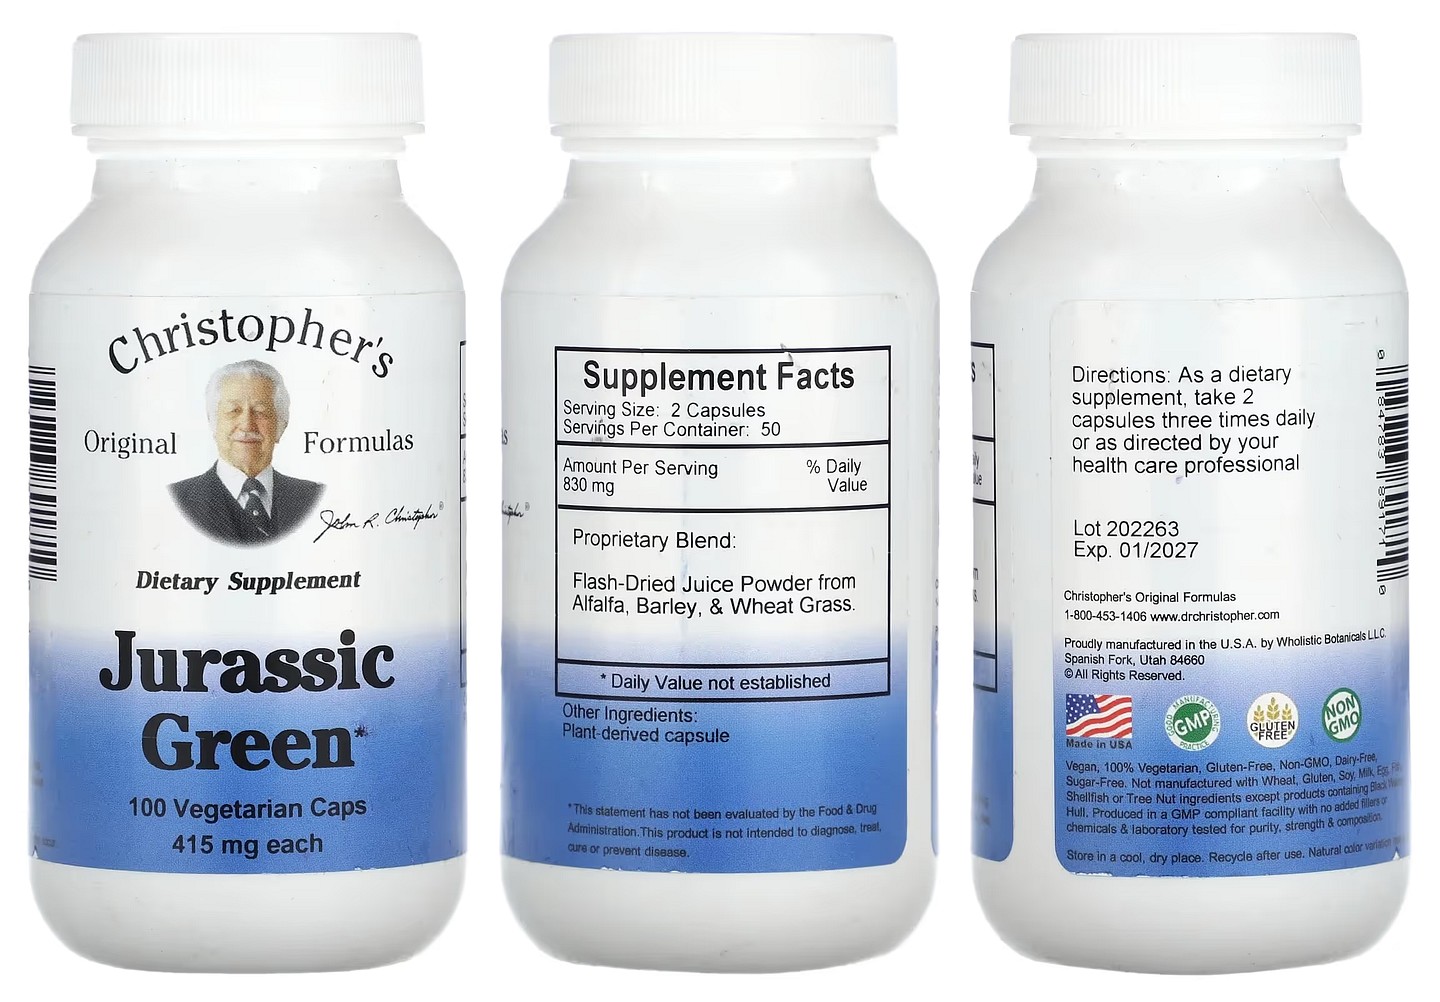 Dr. Christopher's, Jurassic Green packaging